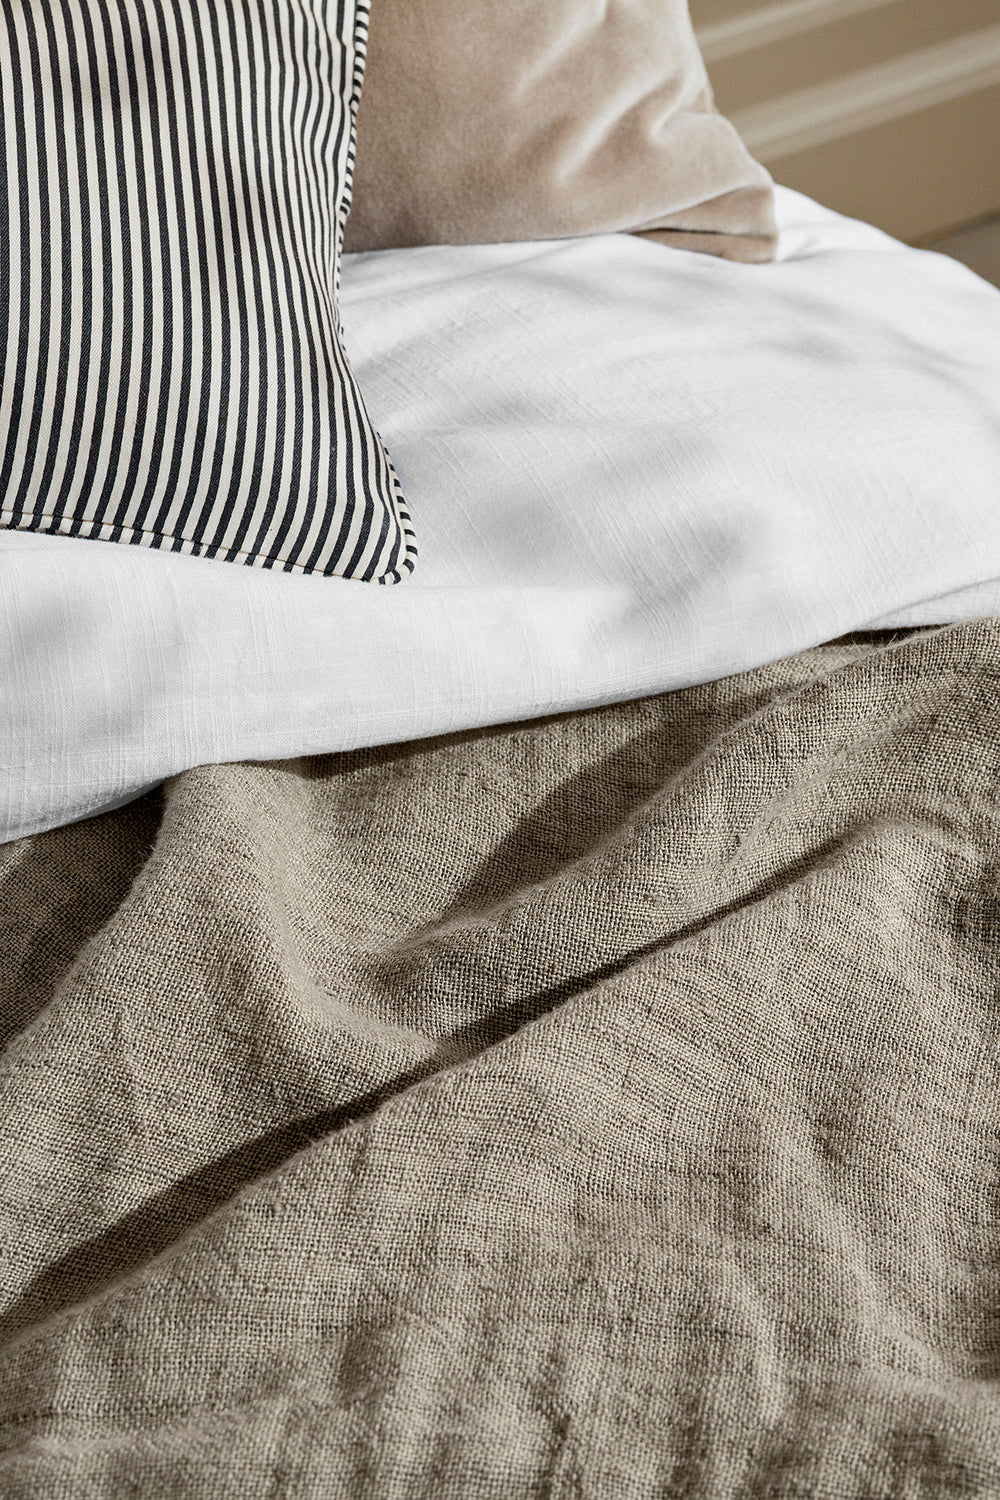 Cozy Living Luxury Rustic Linen Bedspread - EARTH